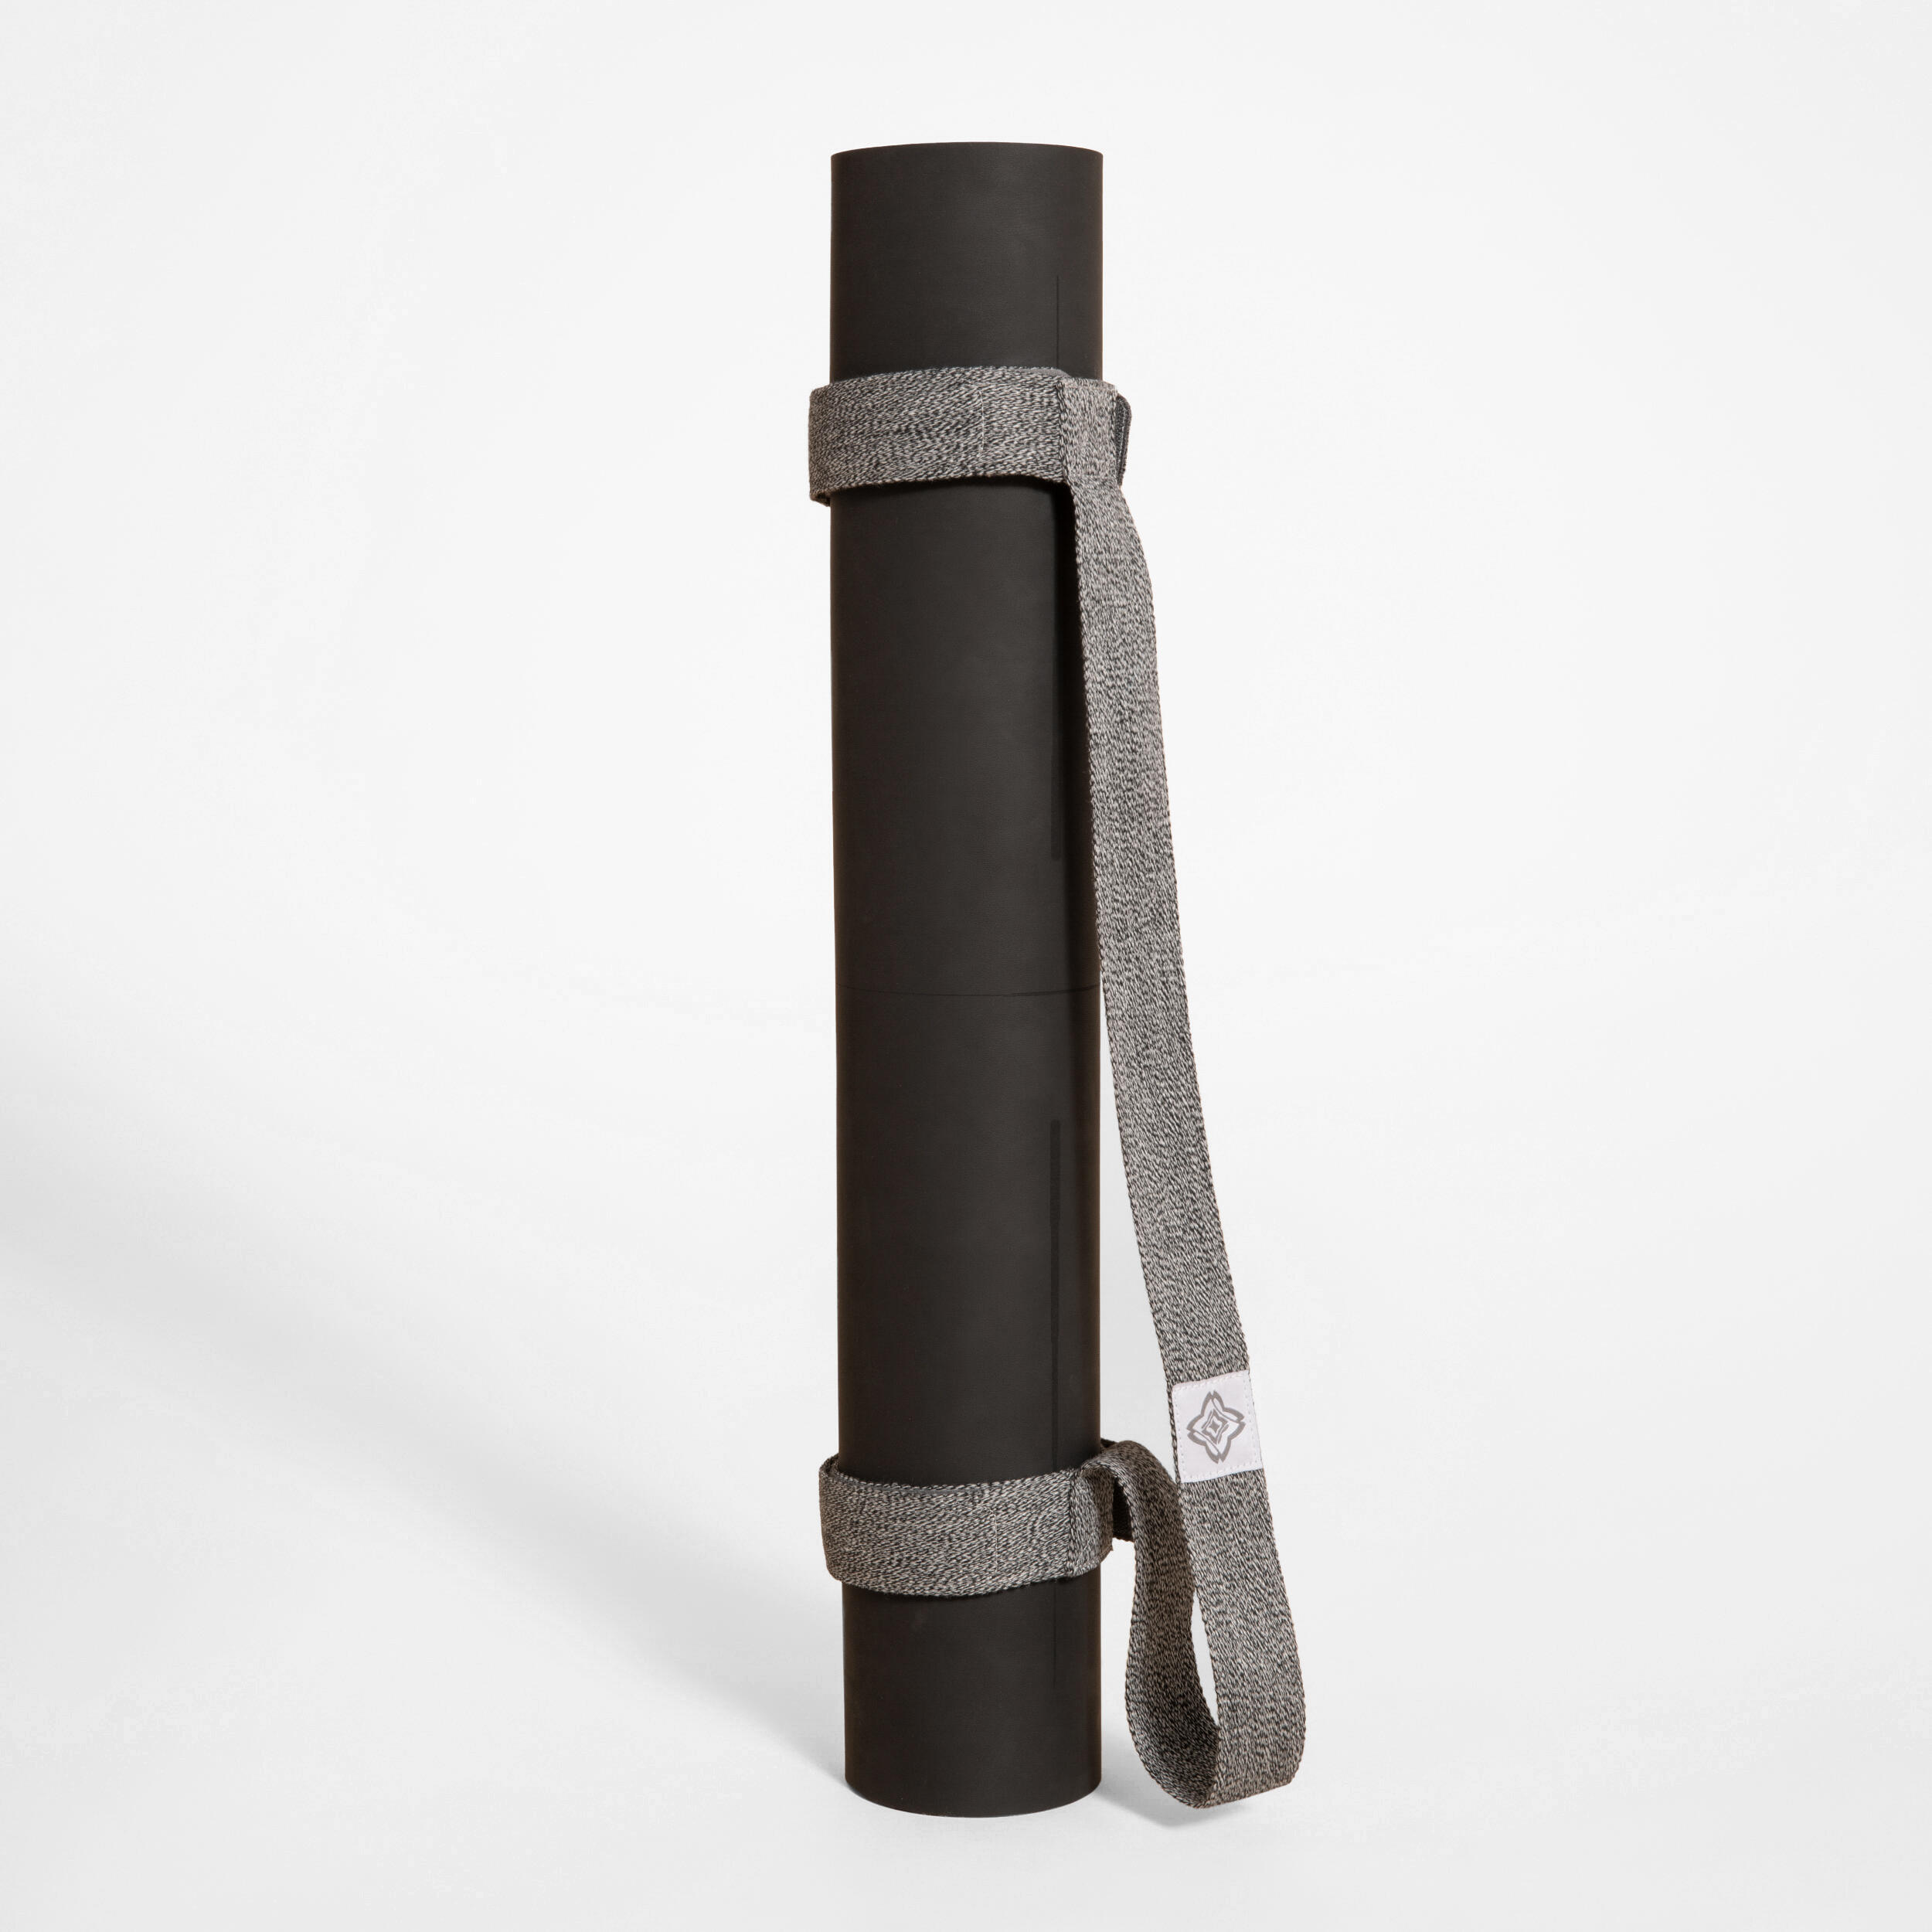 Yogwise Yoga Mat Cover with Adjustable Shoulder Strap, Stylish